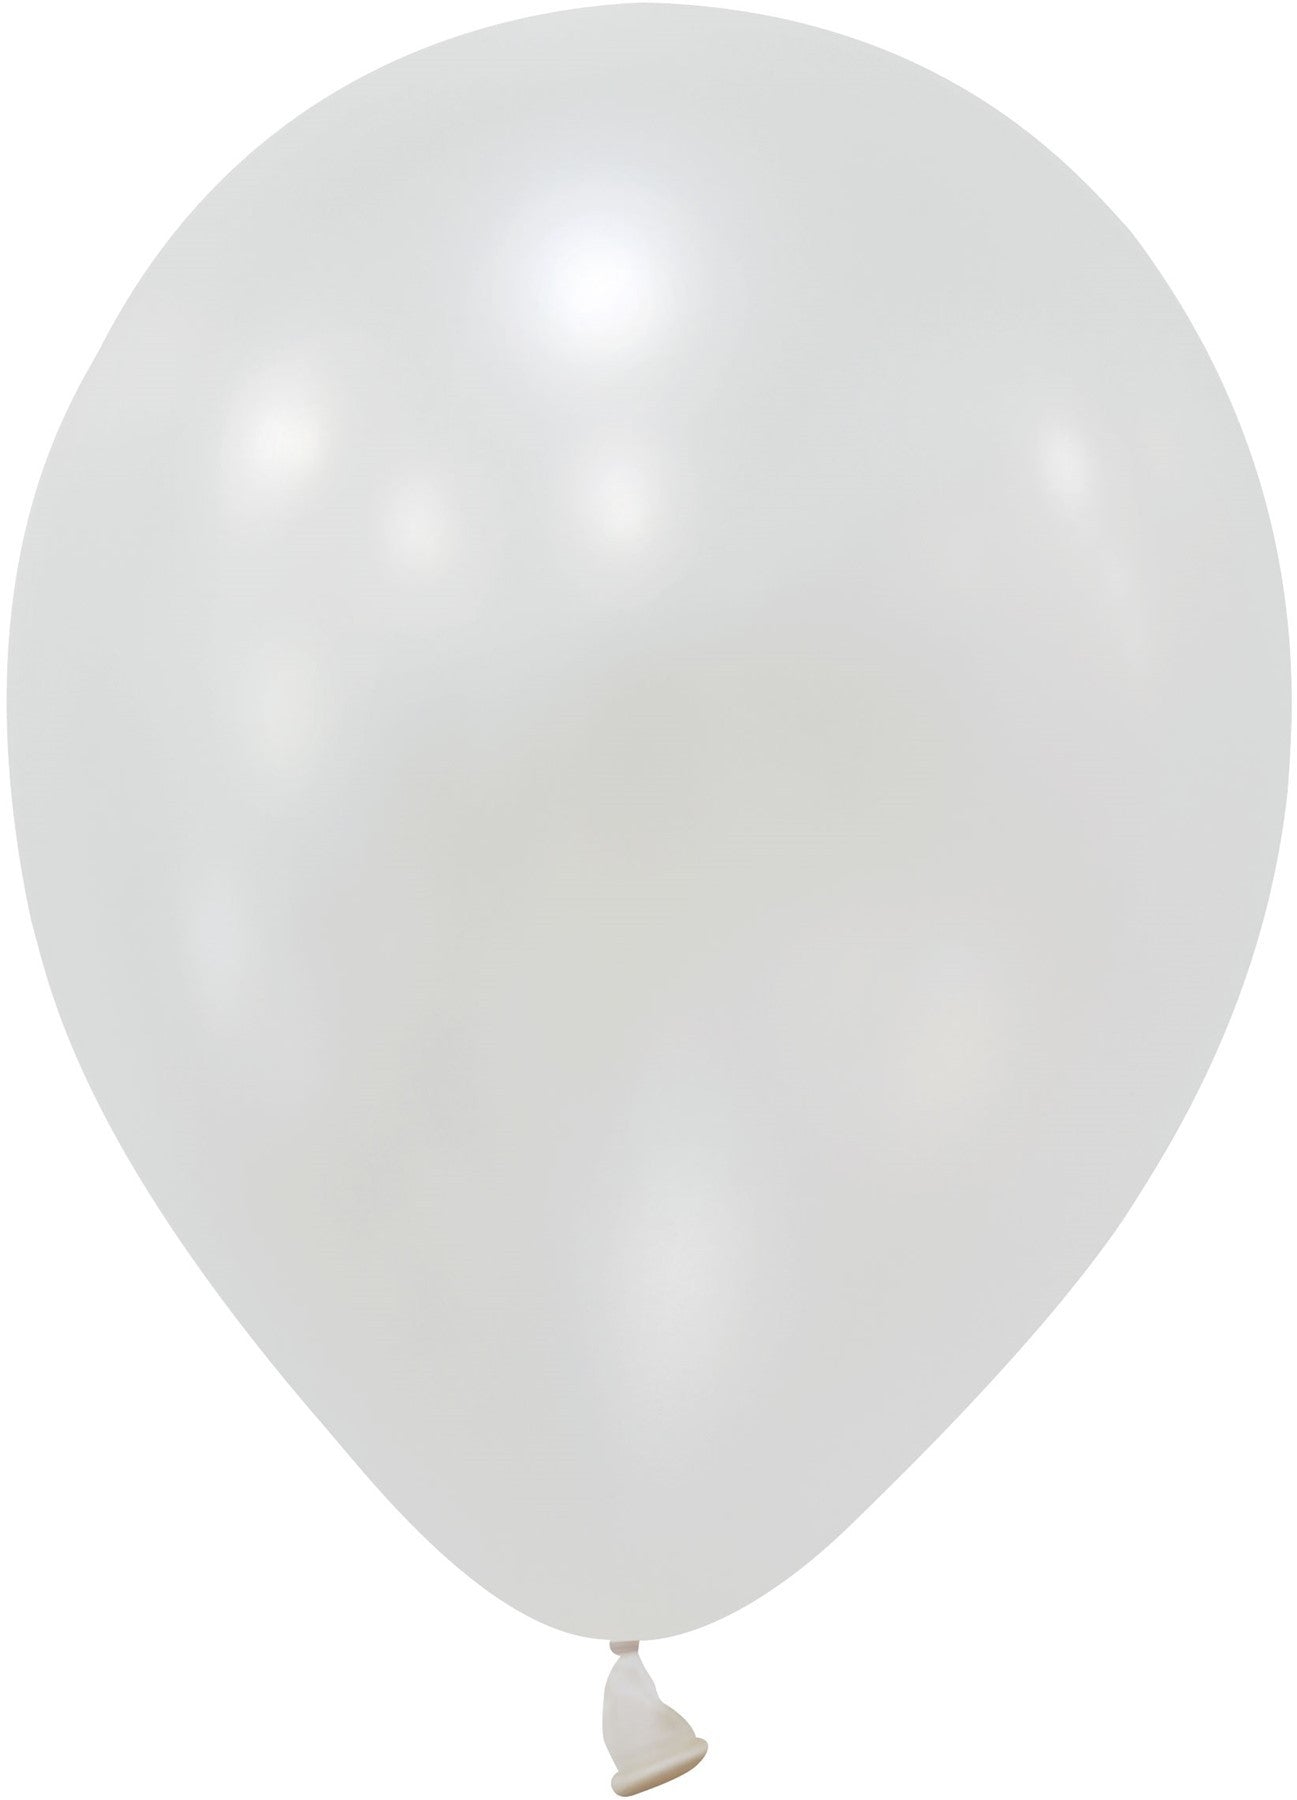 View White Metallic Latex Balloon 12 inch Pk 100 information